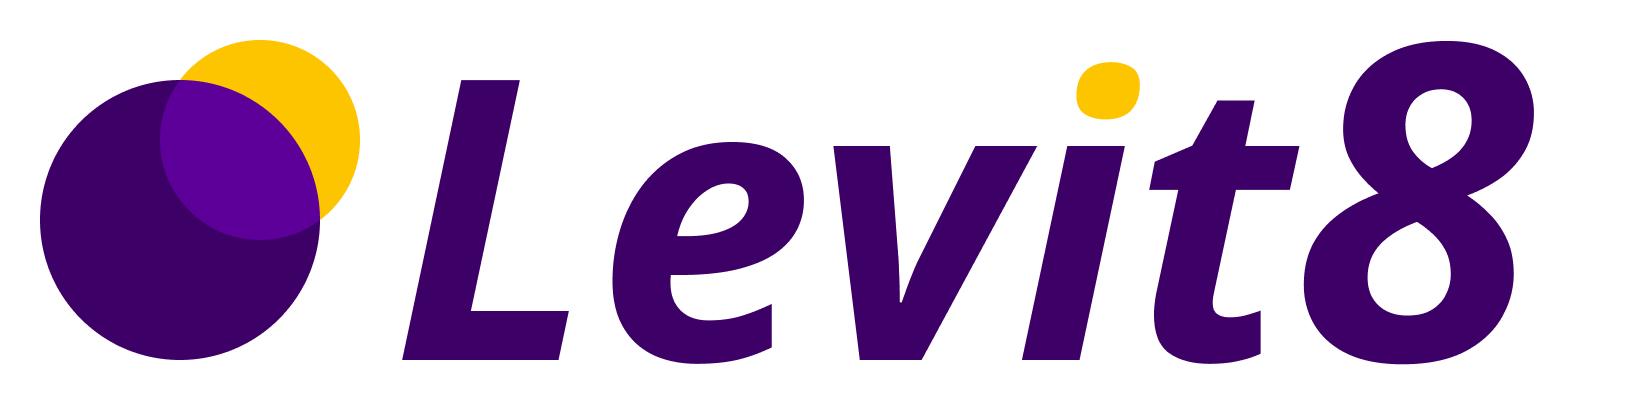 Levit8 Logo - Primary on Light - Transparent BG